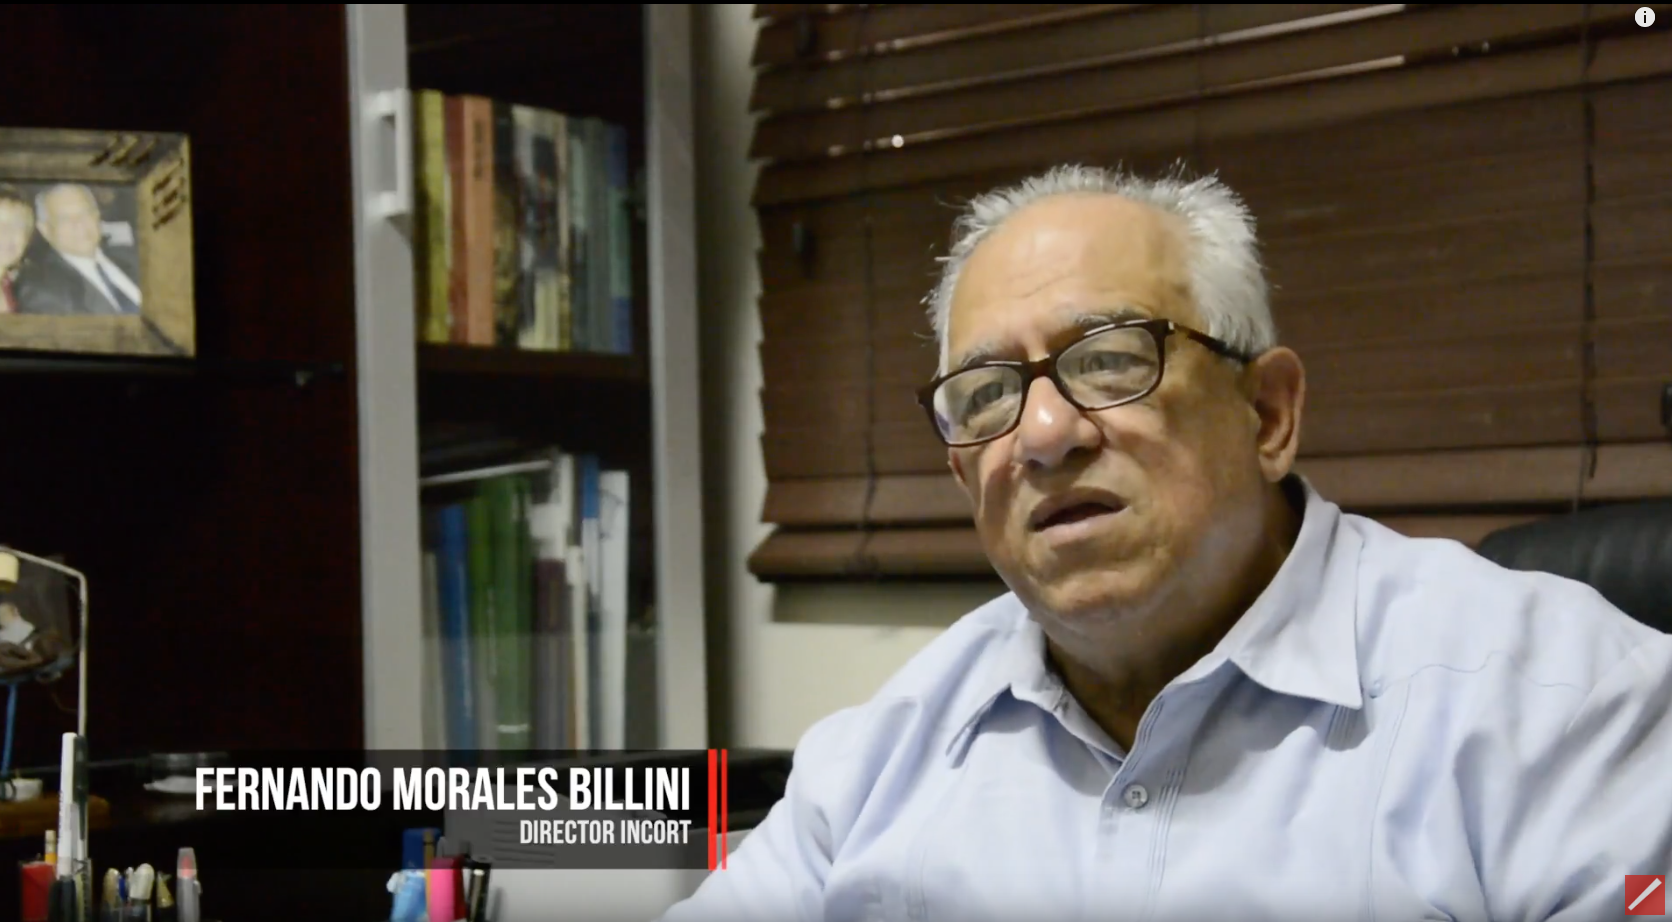 Dr. Fernando Morales Billini